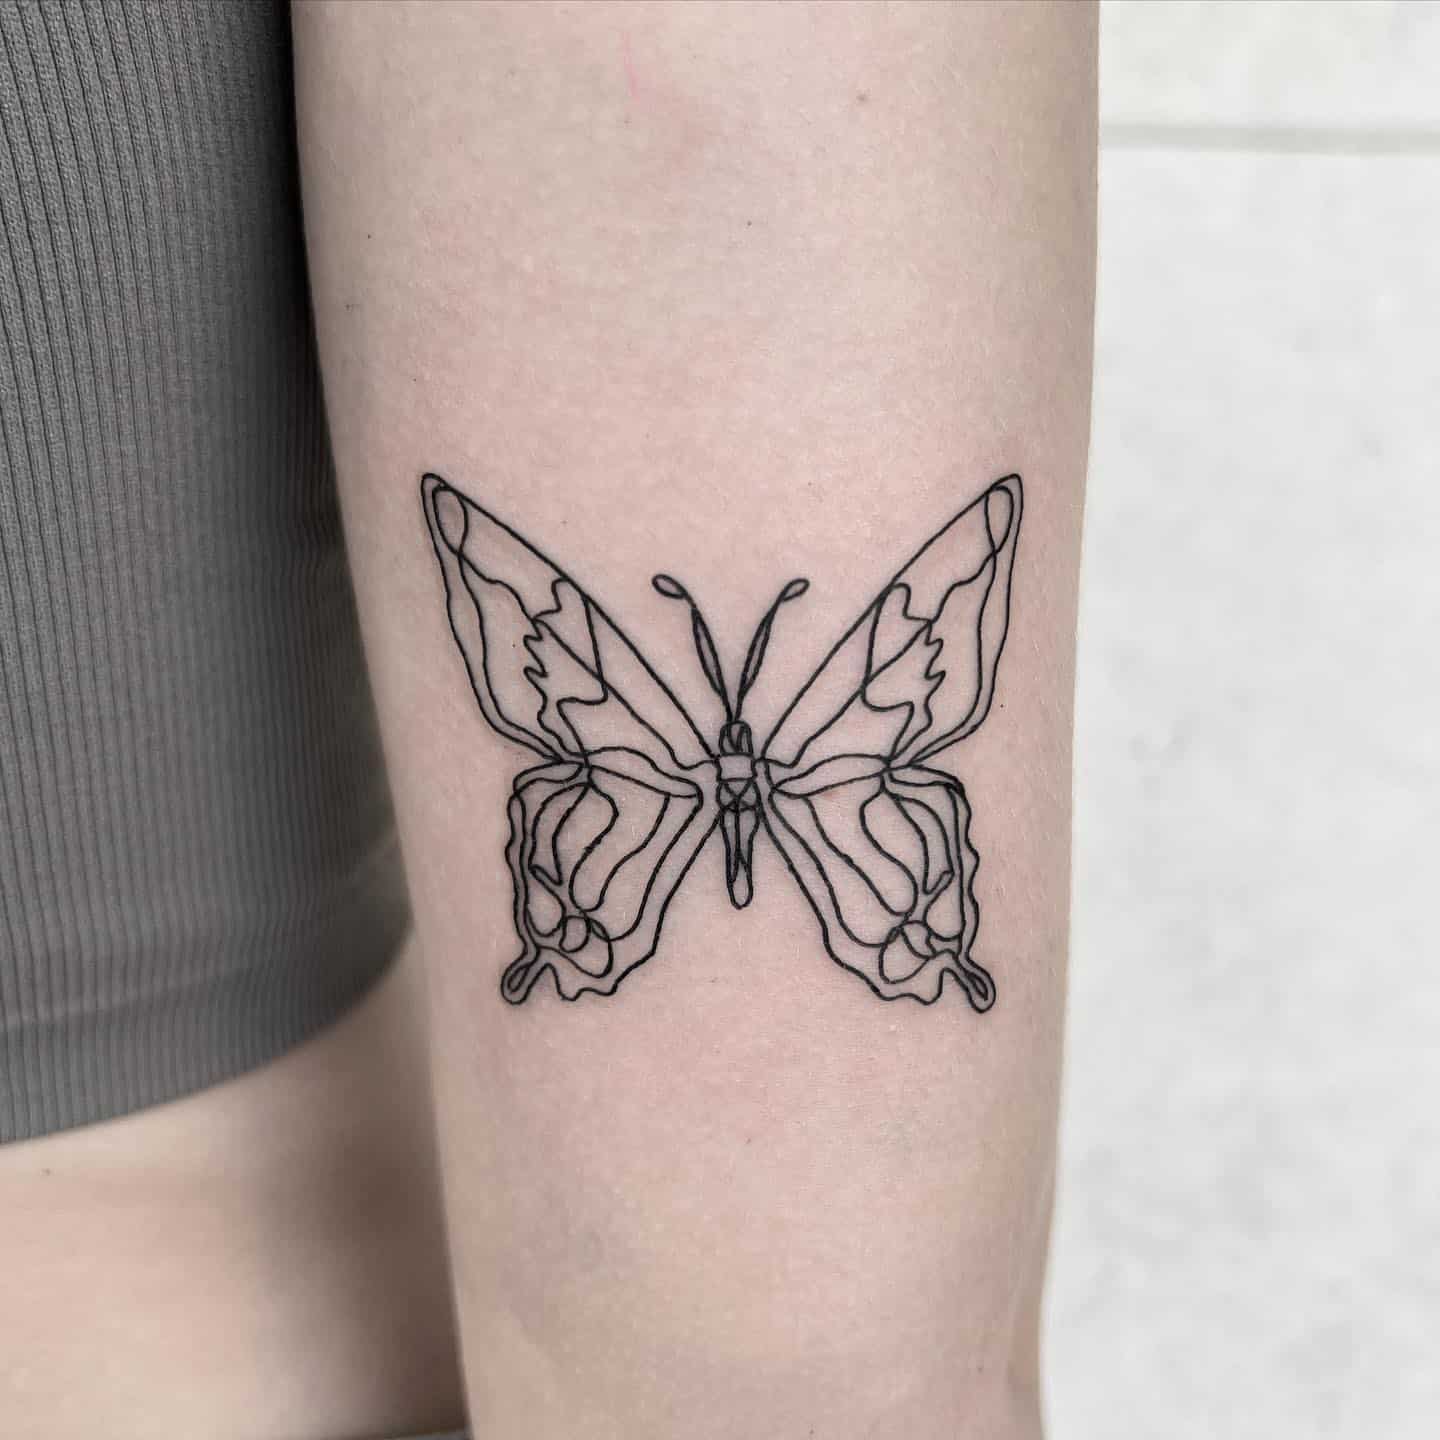 Fineline butterfly tattoo by patriciasullivantattoos